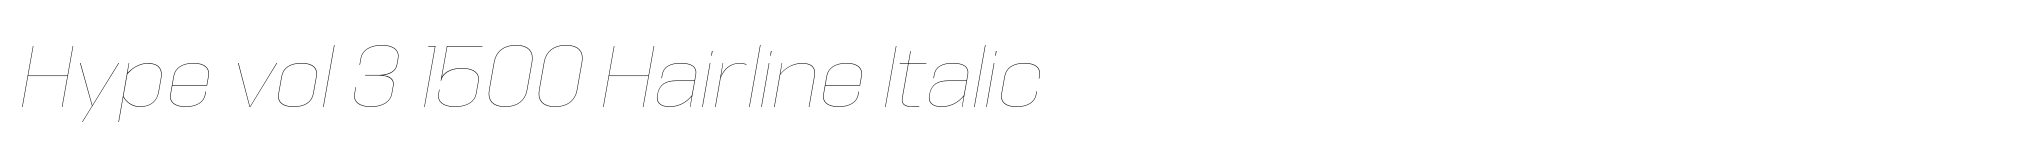 Hype vol 3 1500 Hairline Italic image